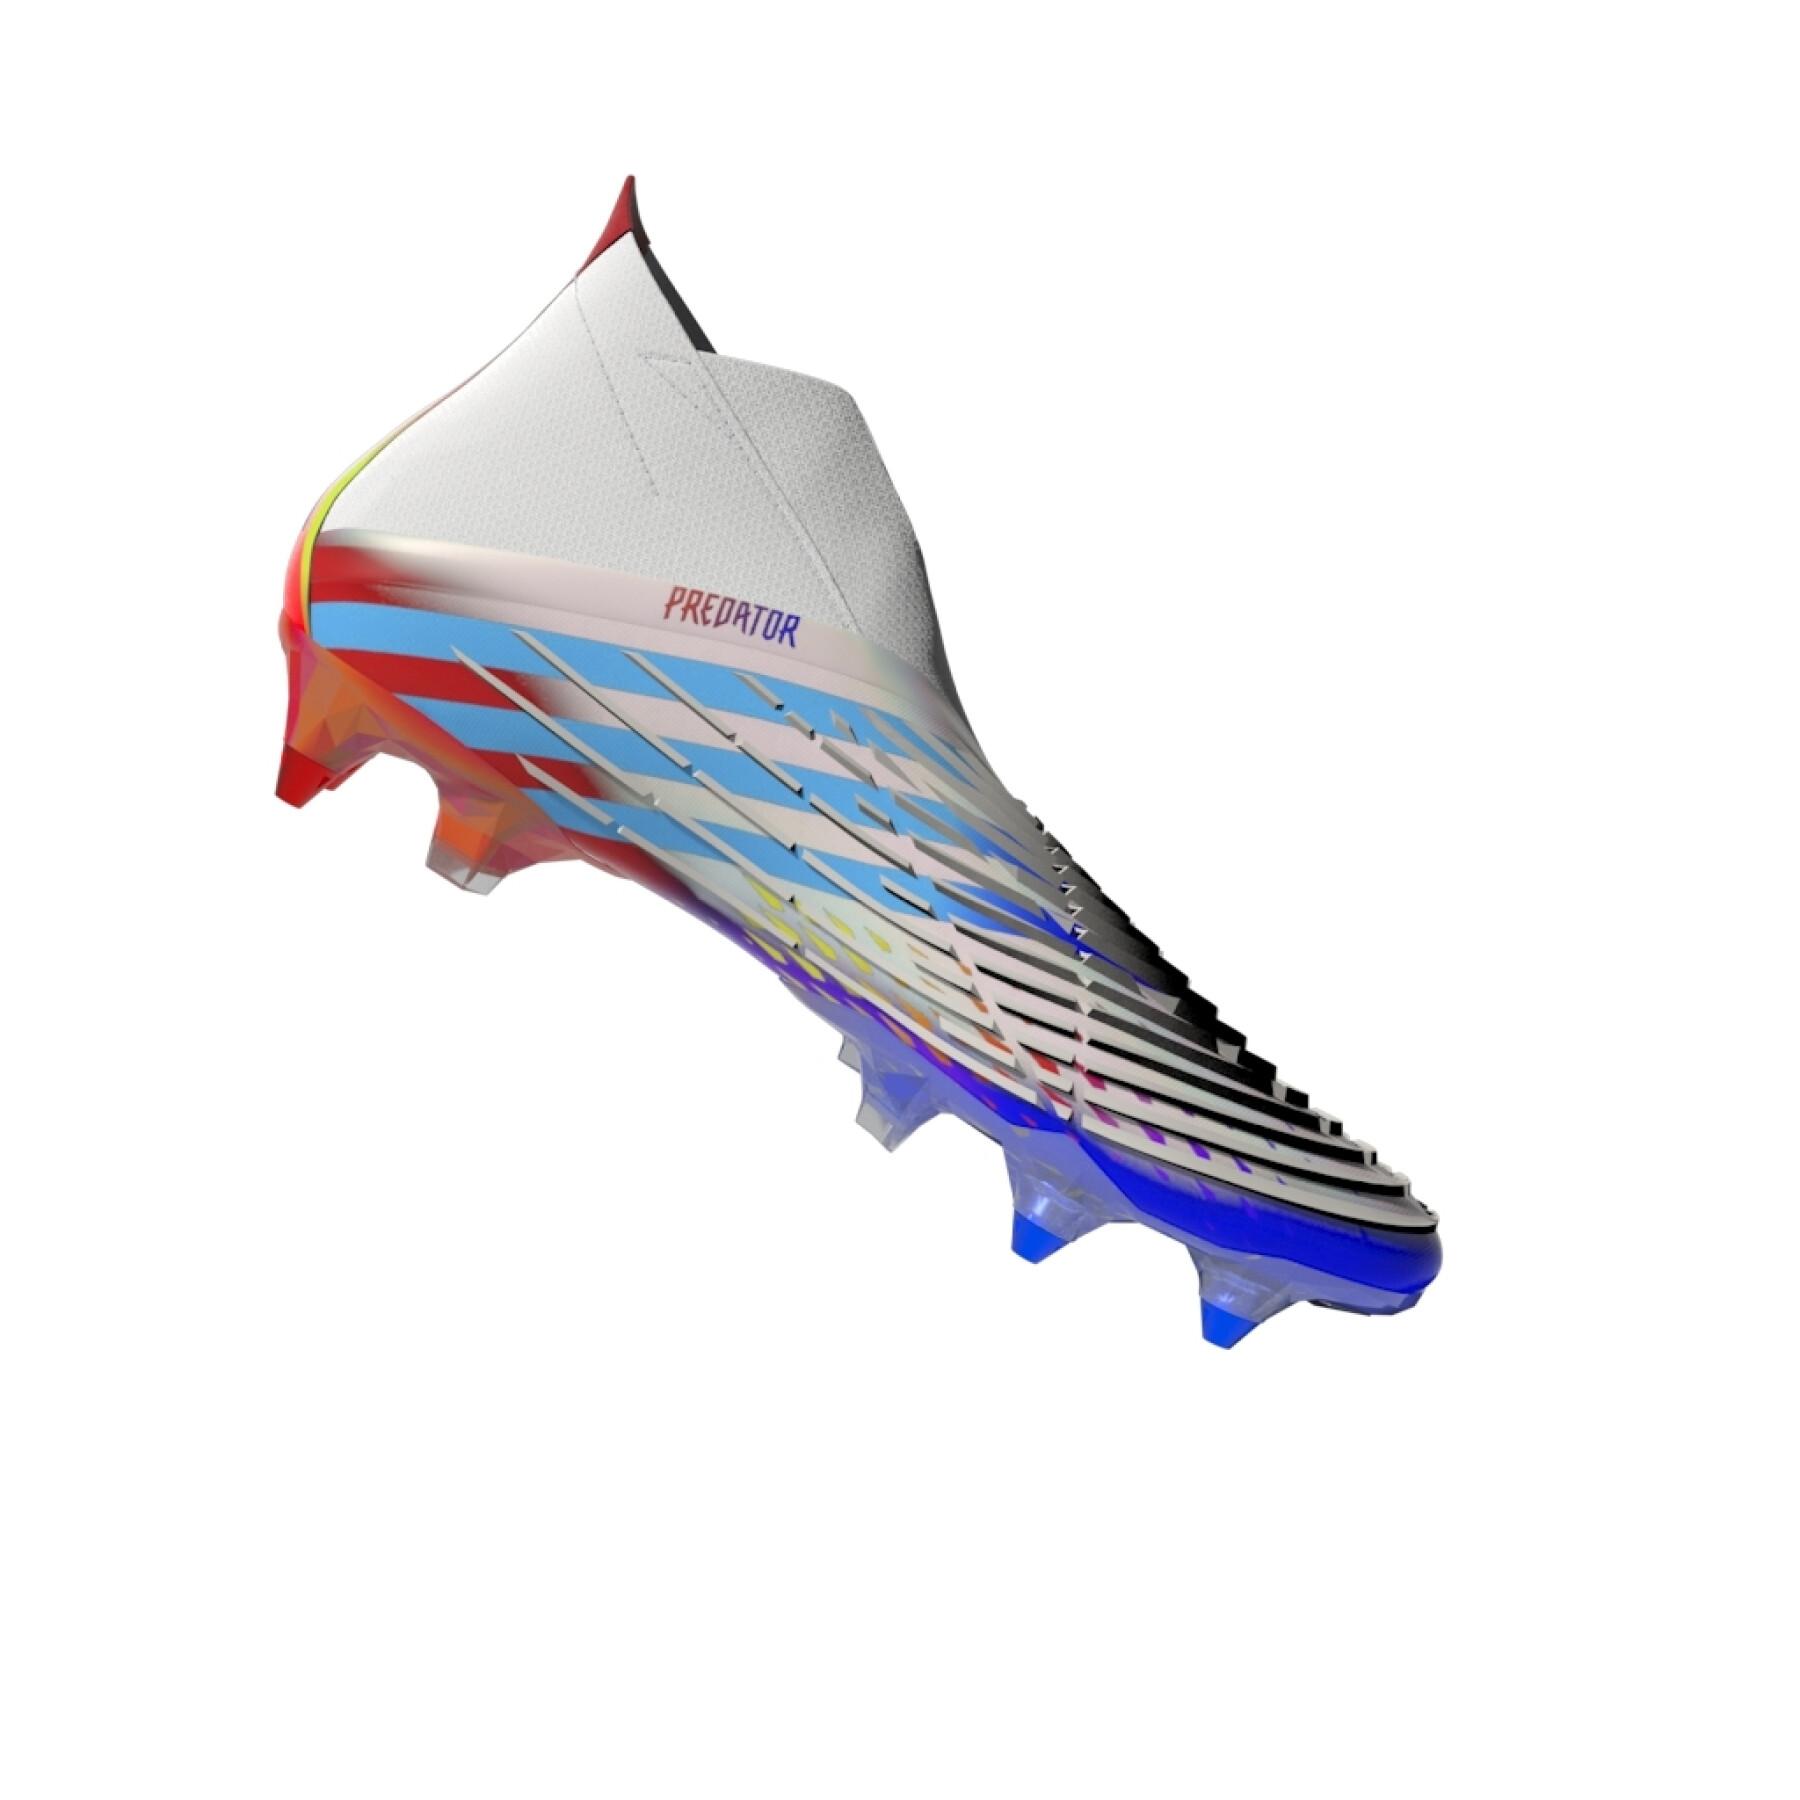 Soccer shoes adidas Predator Edge+ SG - Al Rihla